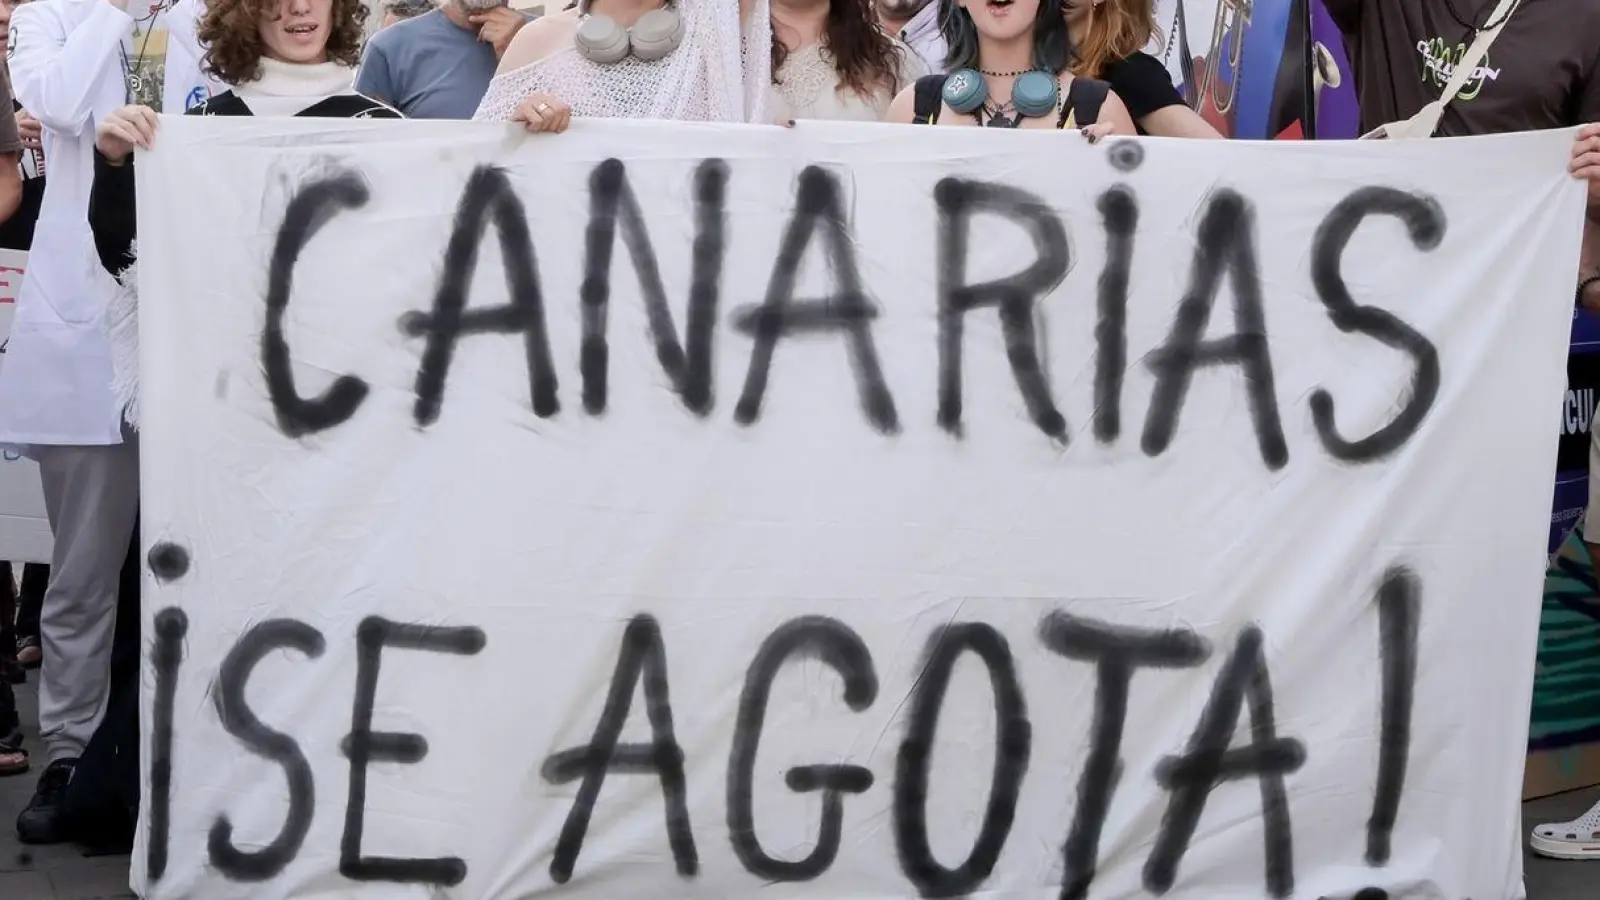 Canarias se agota - die Kanaren haben genug. (Foto: Europa Press Canarias/EUROPA PRESS/dpa)